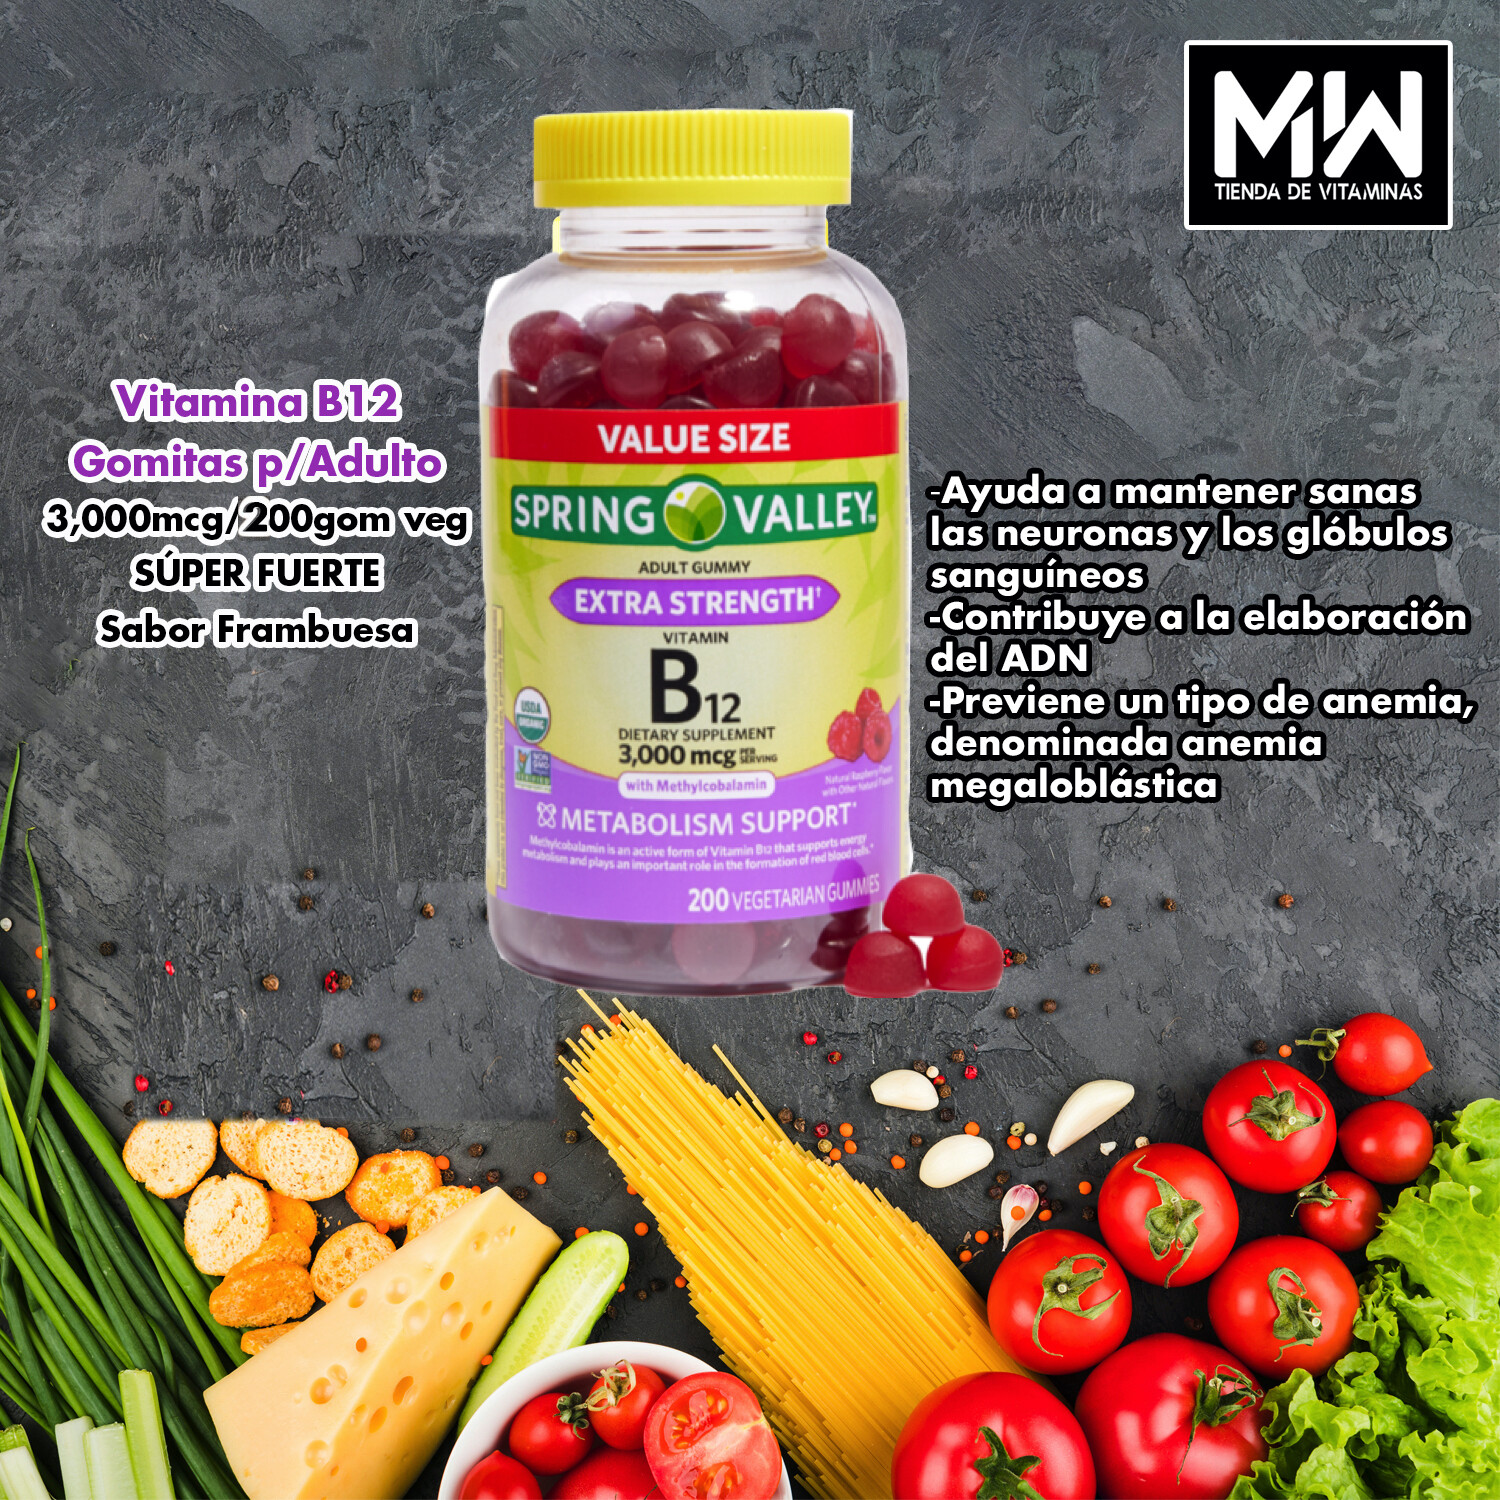 Vitamina B12  gomitas vegatarianas / Vitamin B12  3,000mcg. 200 adult gummy vegetarian